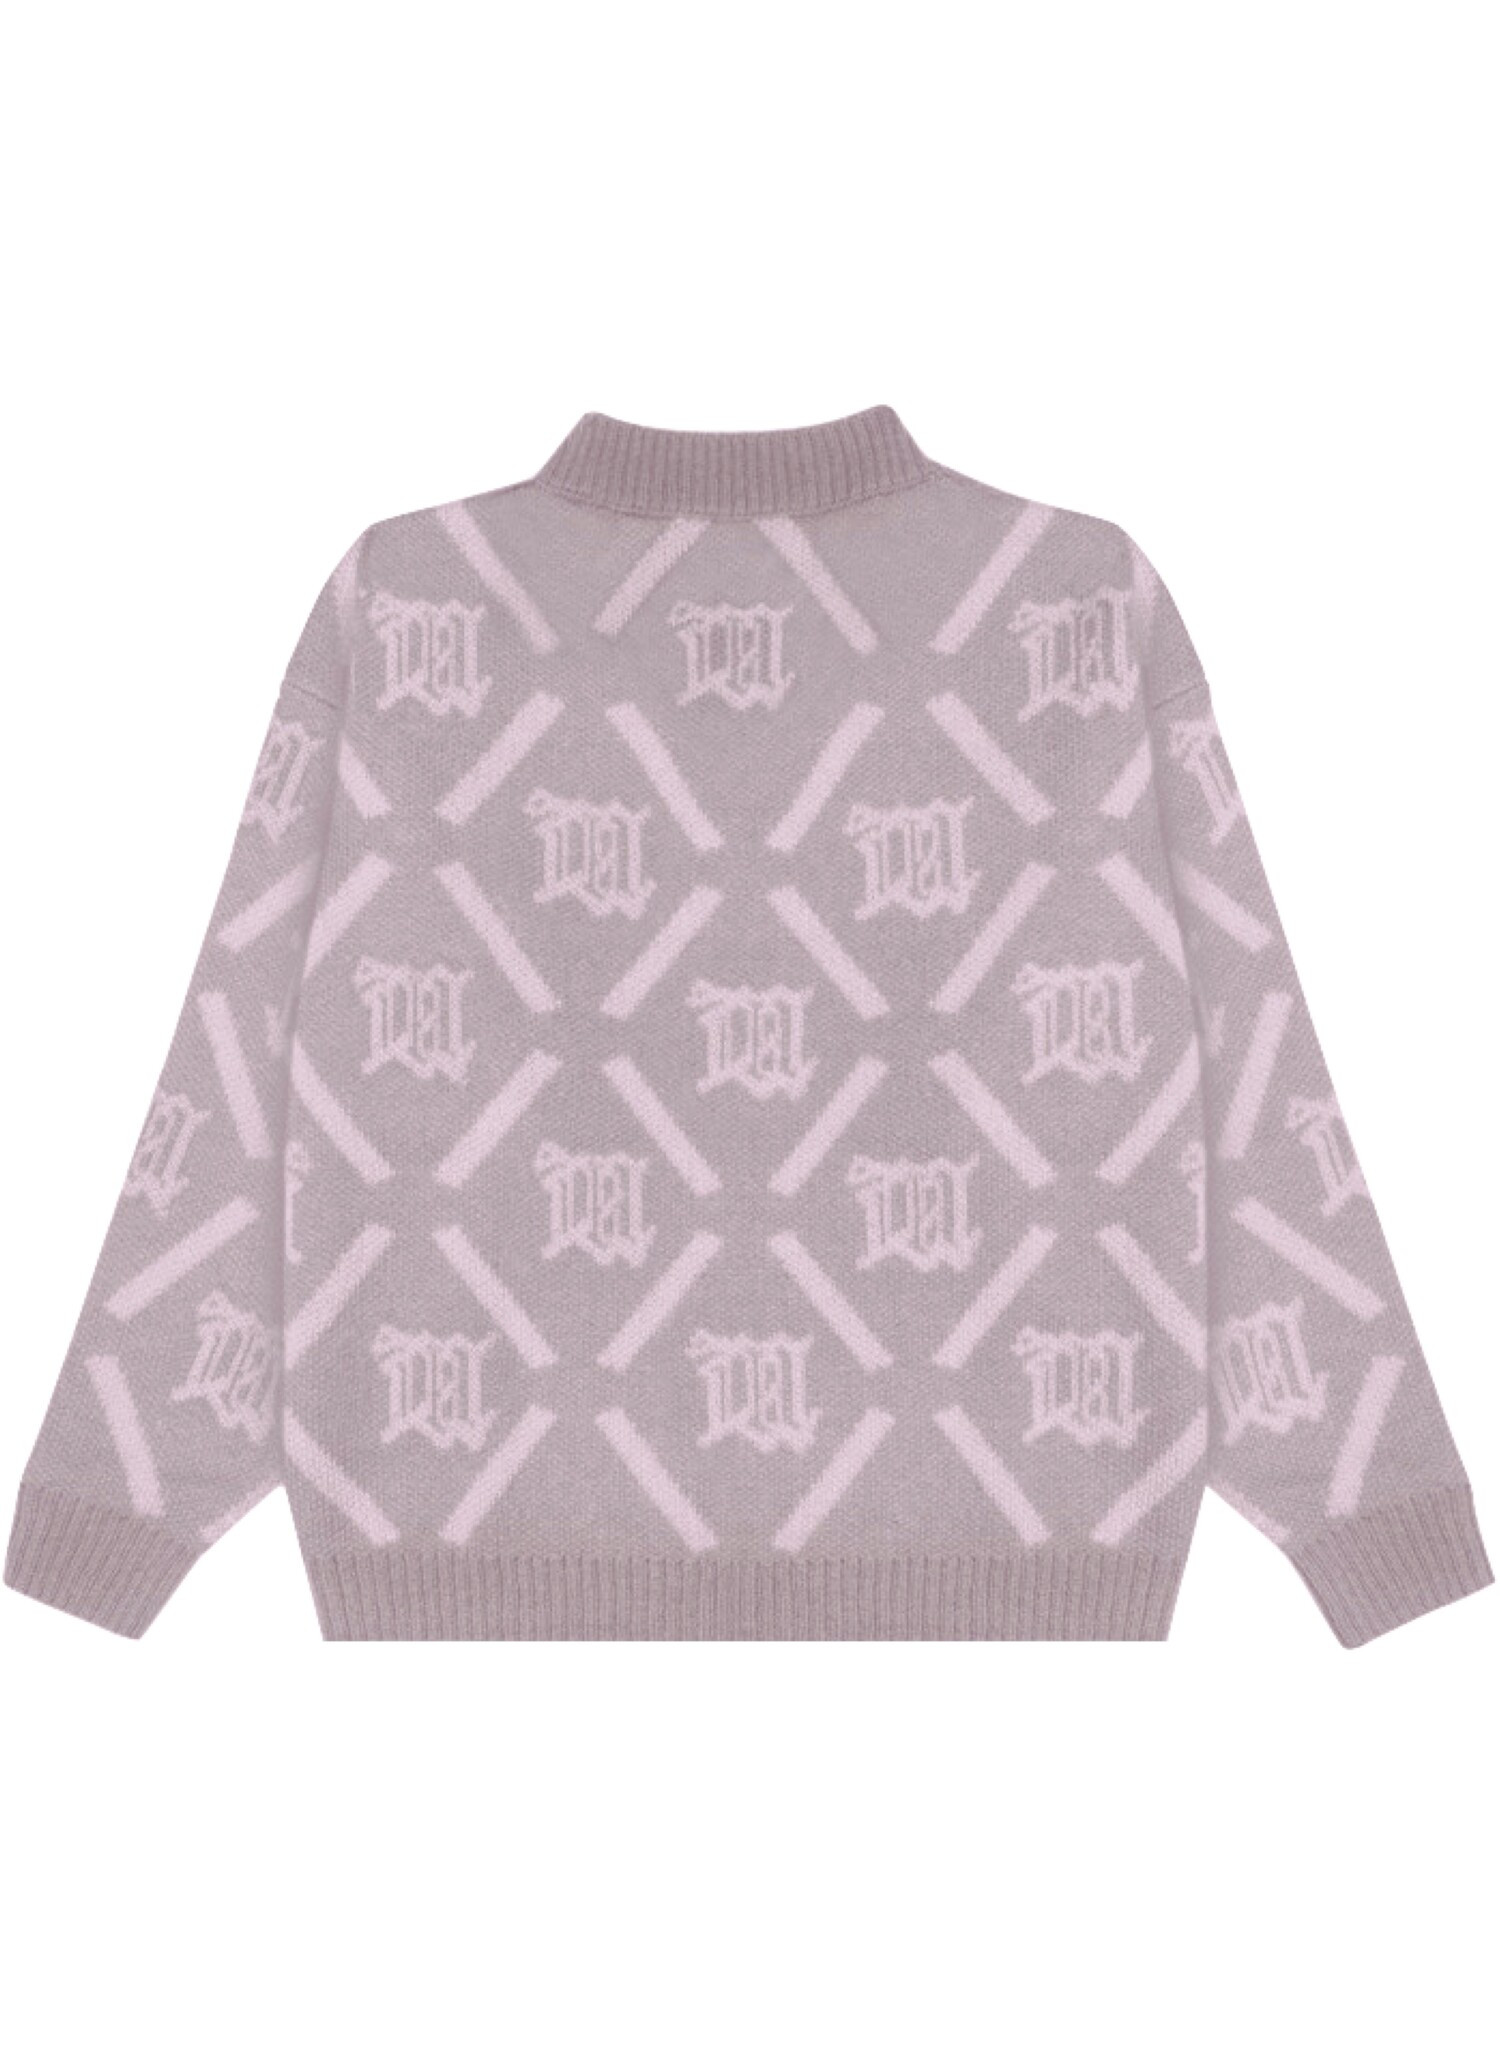 MISBHV Monogram Long Sleeve Sweater